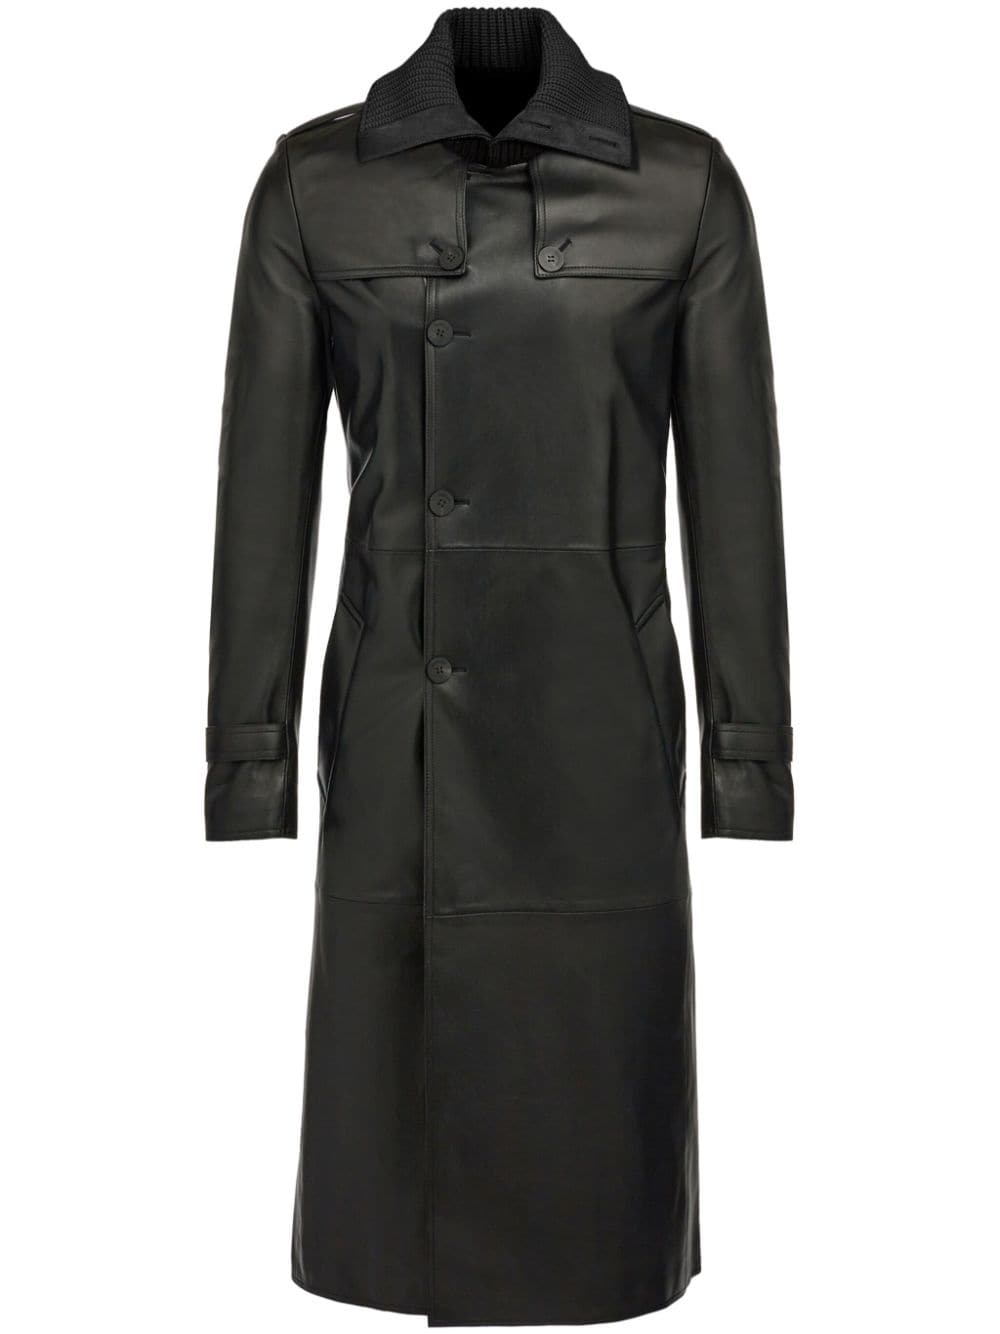 Zara - Double-Breasted High Collar Coat - Black - Women